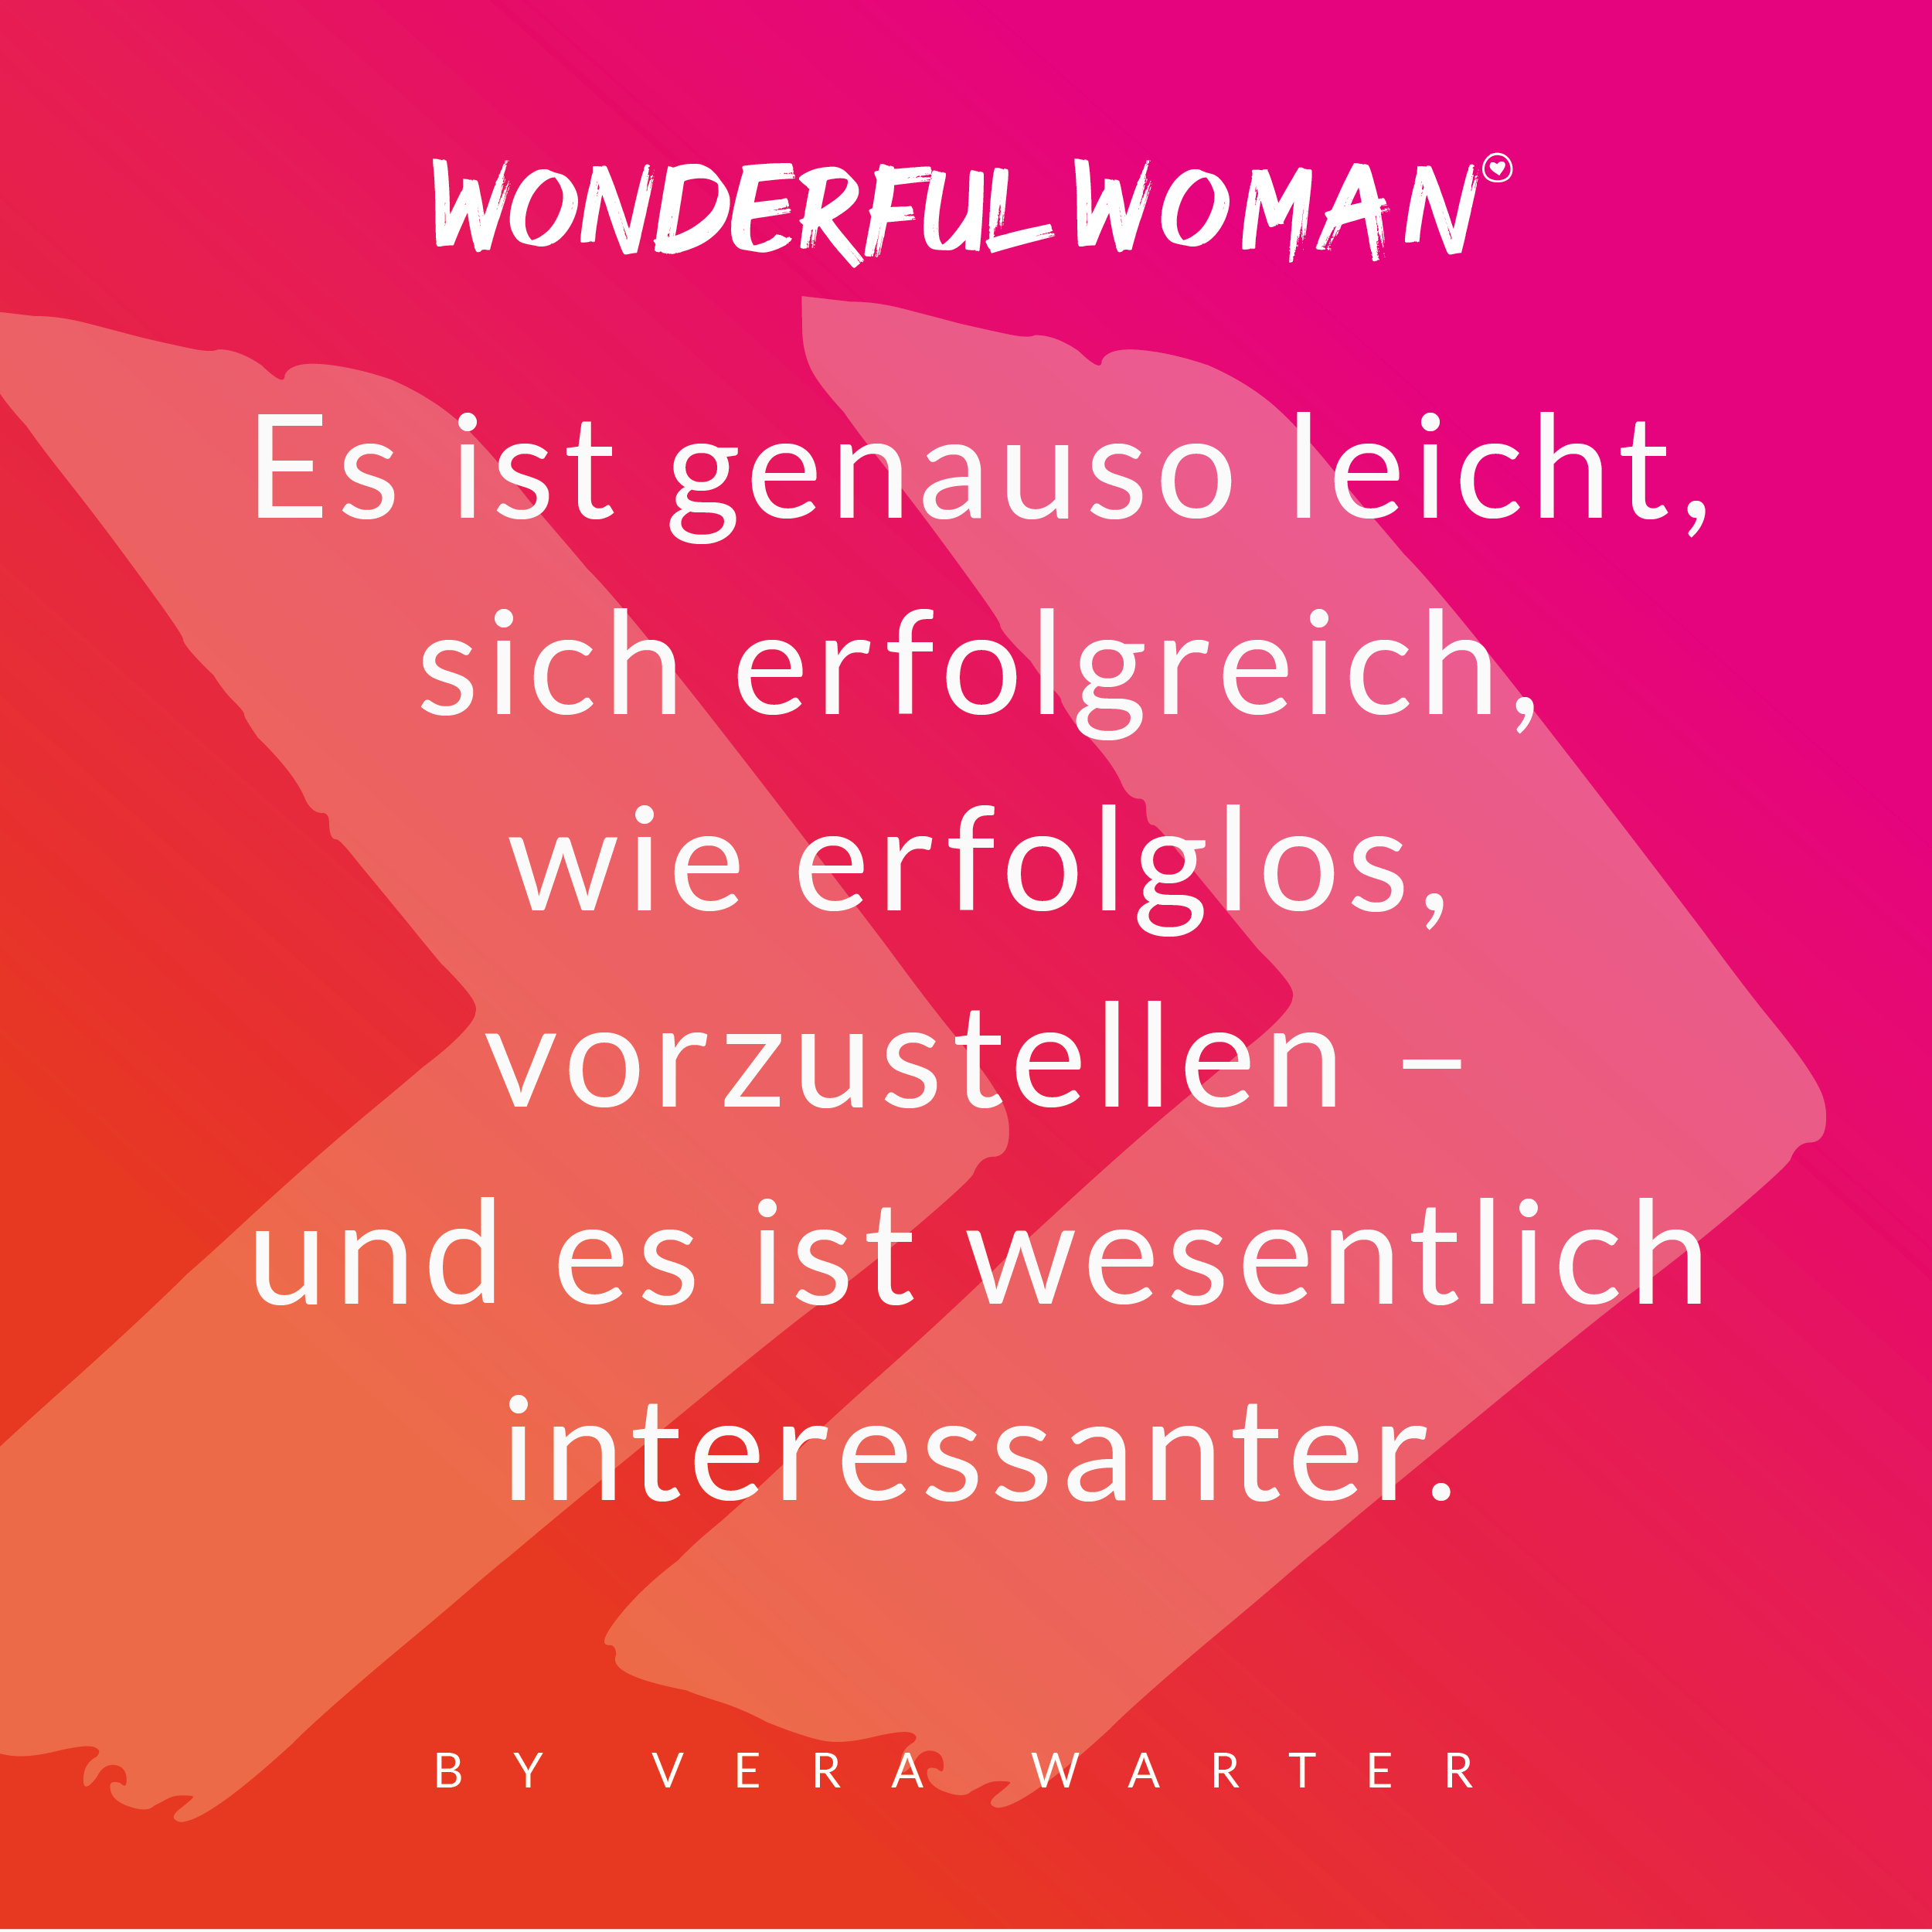 WonderfulWoman by Vera Warter